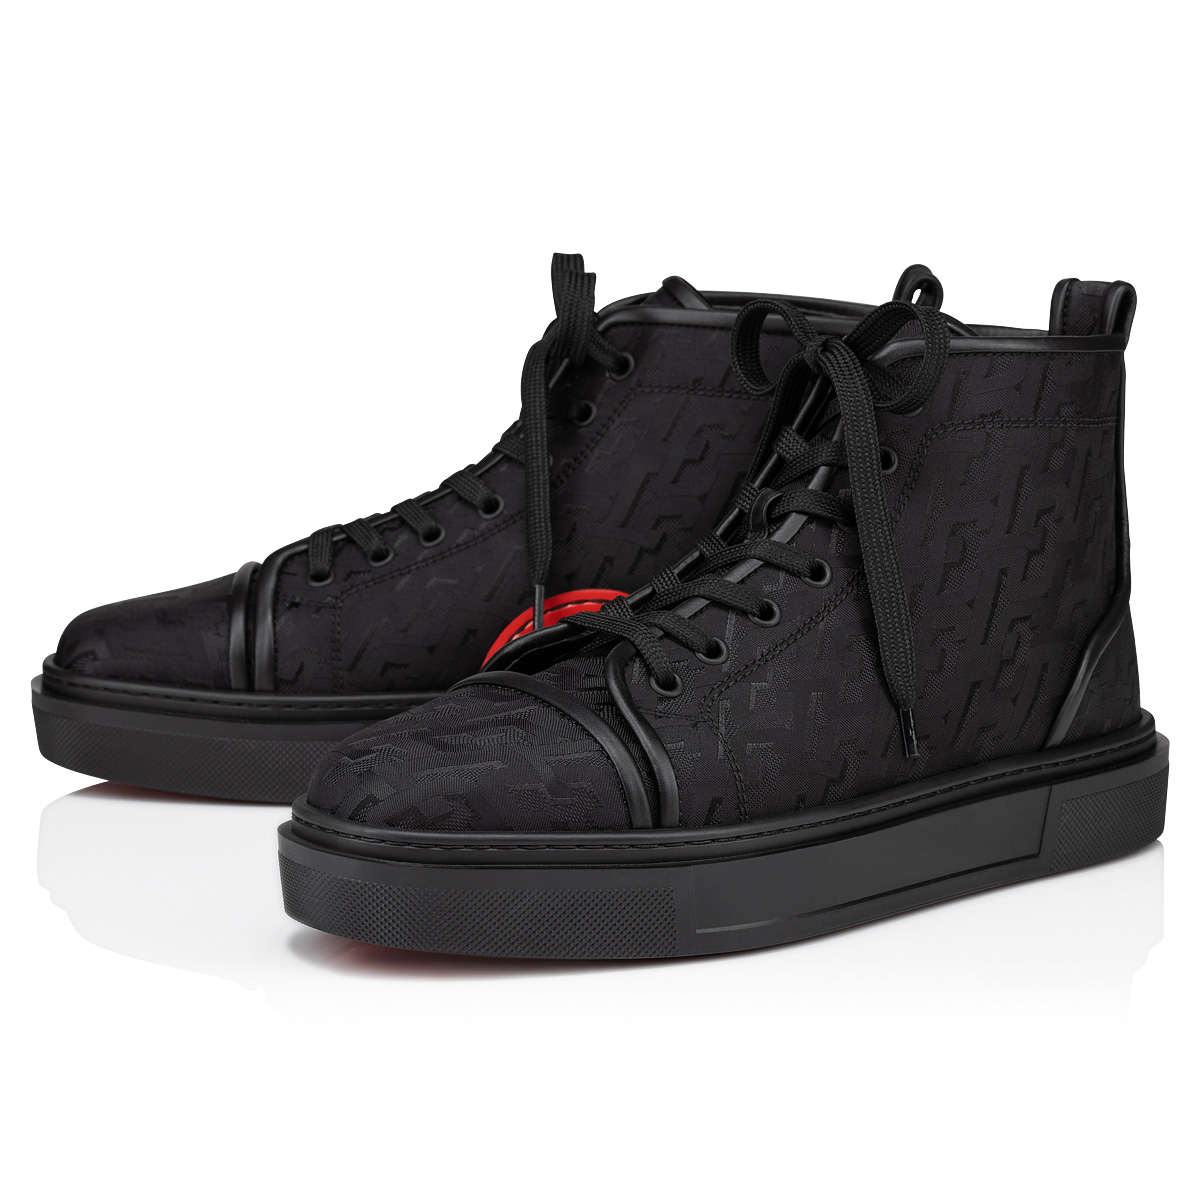 Adolon Junior - Sneakers - Nylon CL Varsity print and calf leather